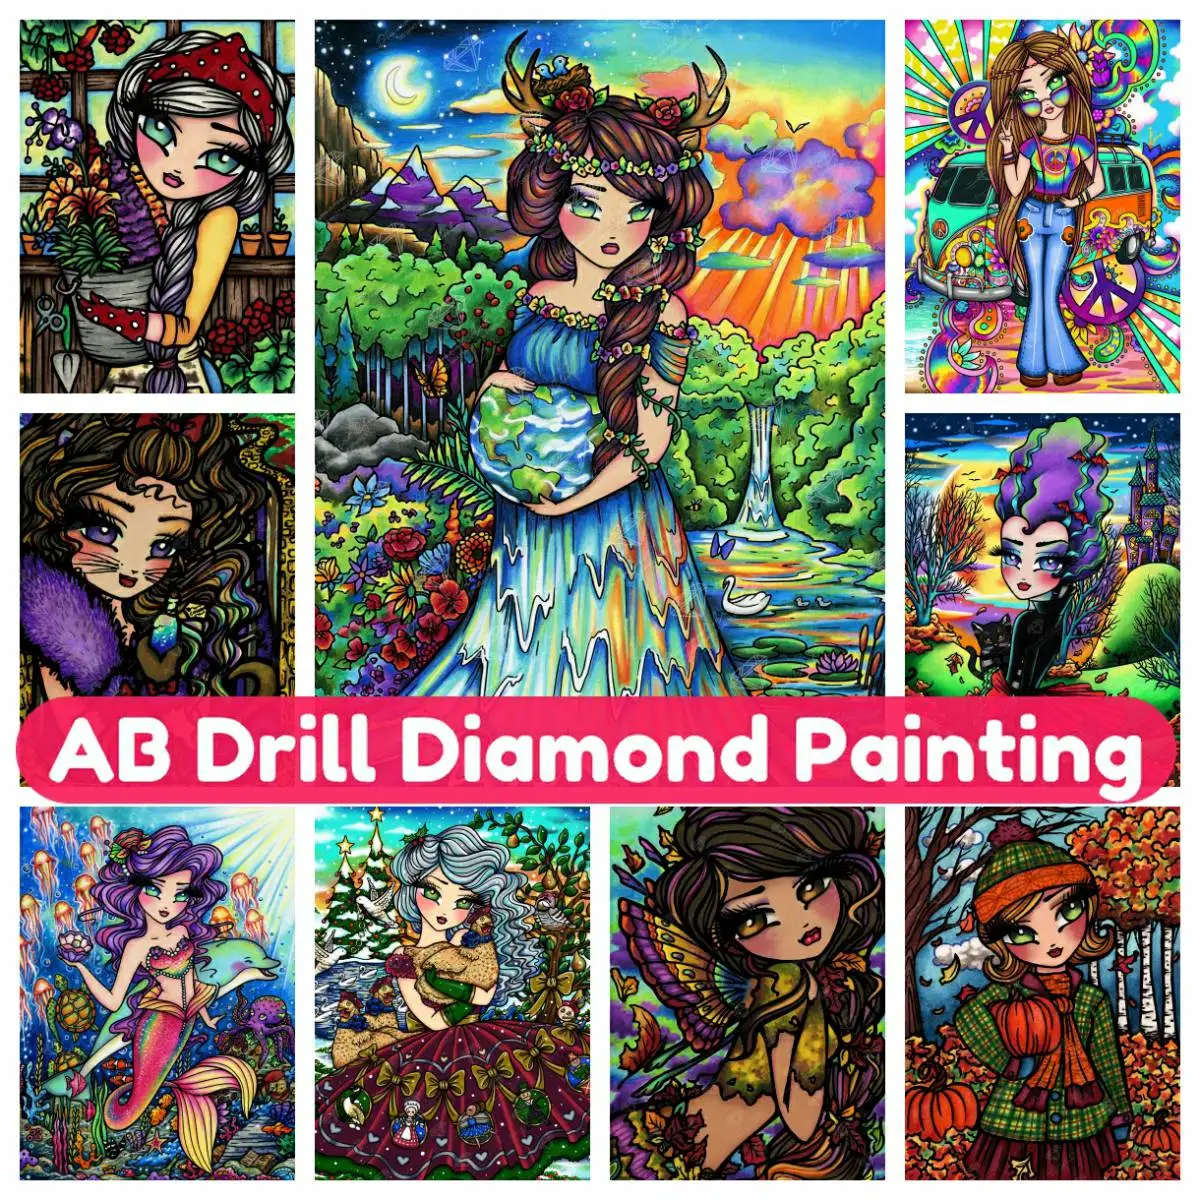 

Flower Market Girl AB Diamond Painting Handmade Rhinestones Cross Stitch Embroidery Full Drill Round Square 5D Home Decor